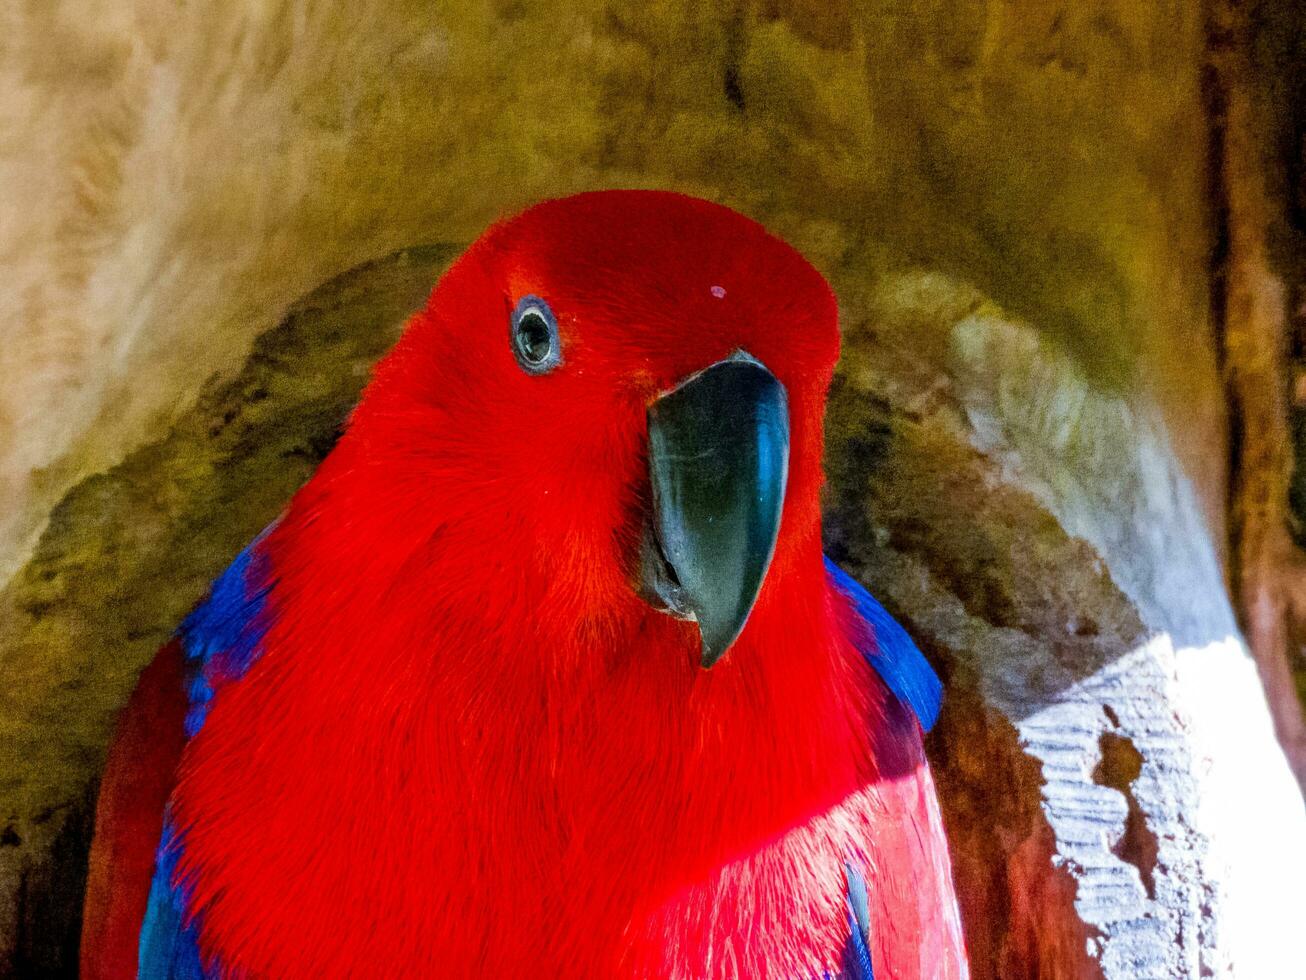 Eclectus Parrot in Australia photo